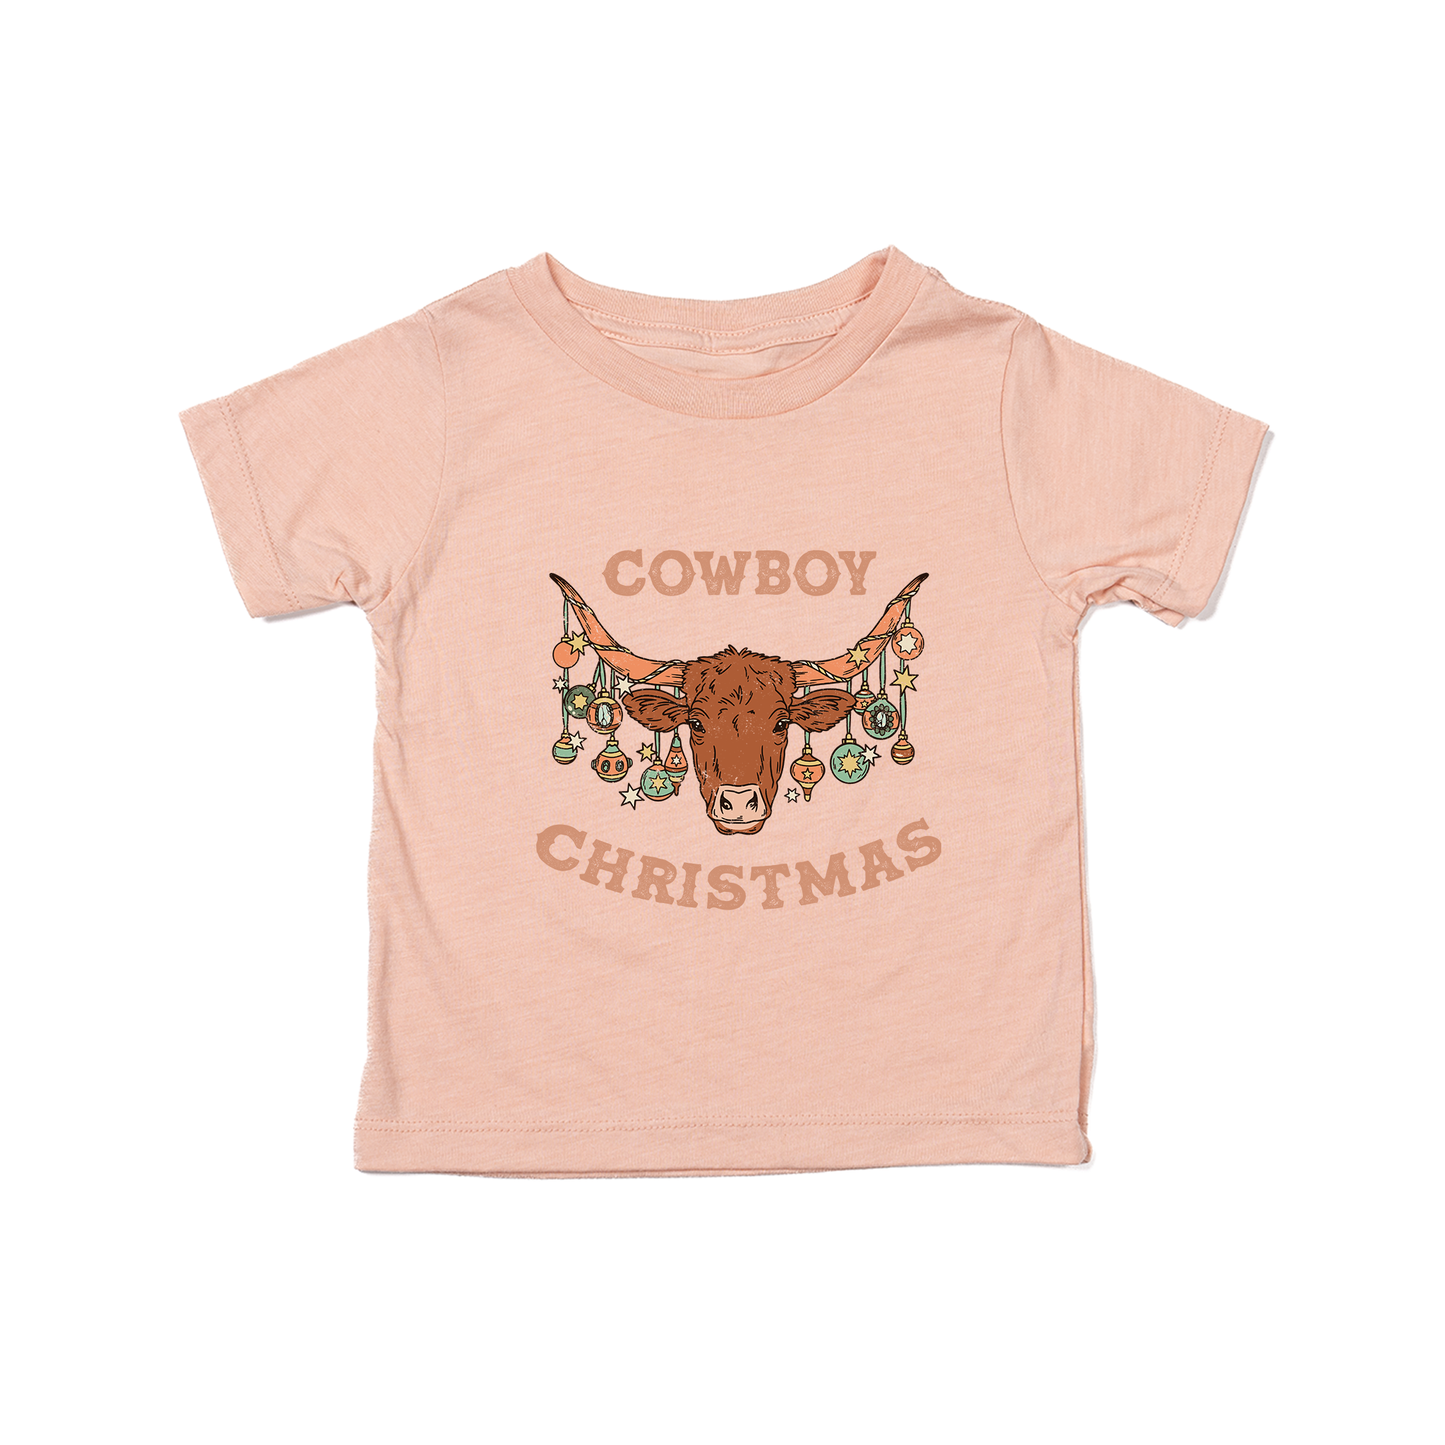 Cowboy Christmas - Kids Tee (Peach)